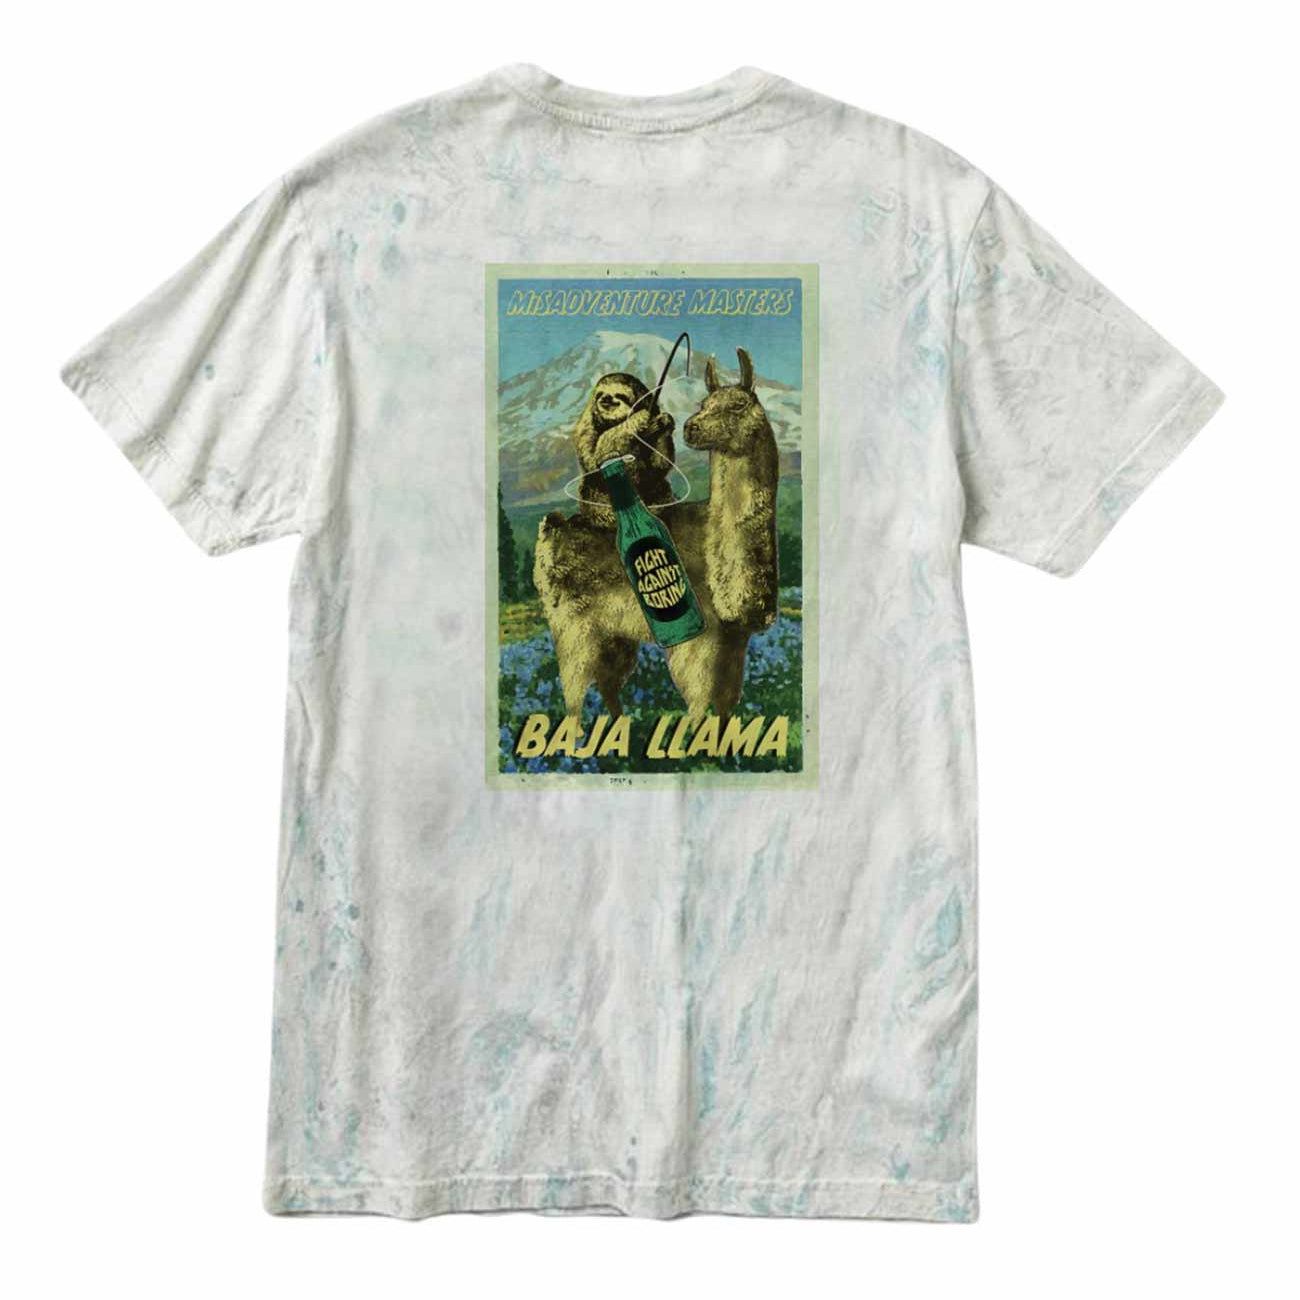 Baja Llama tie dye peruvian cotton sloth llama national park graphic T-shirt